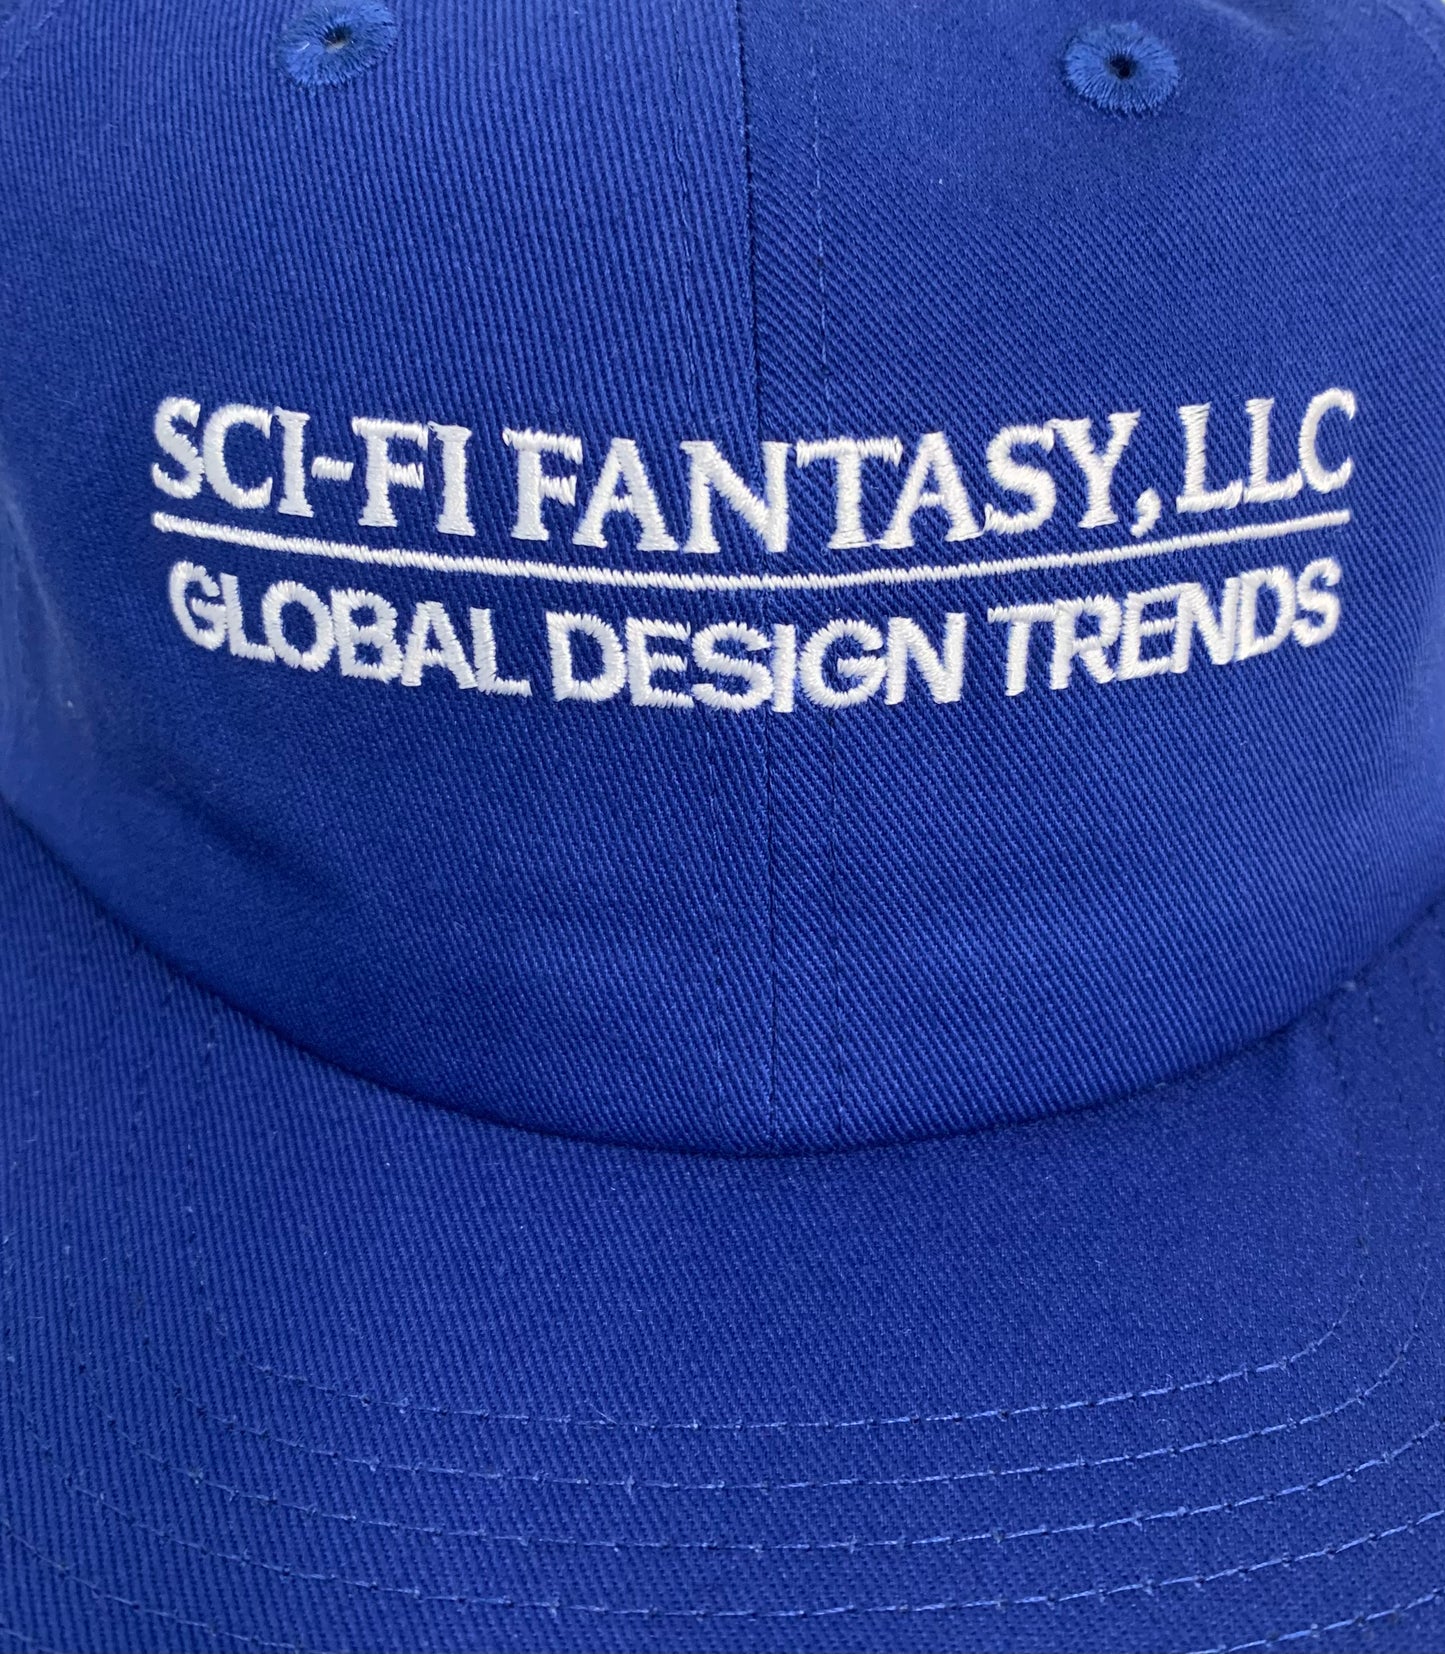 Sci-Fi Fantasy Global Design Trends Hat: Assorted Colors